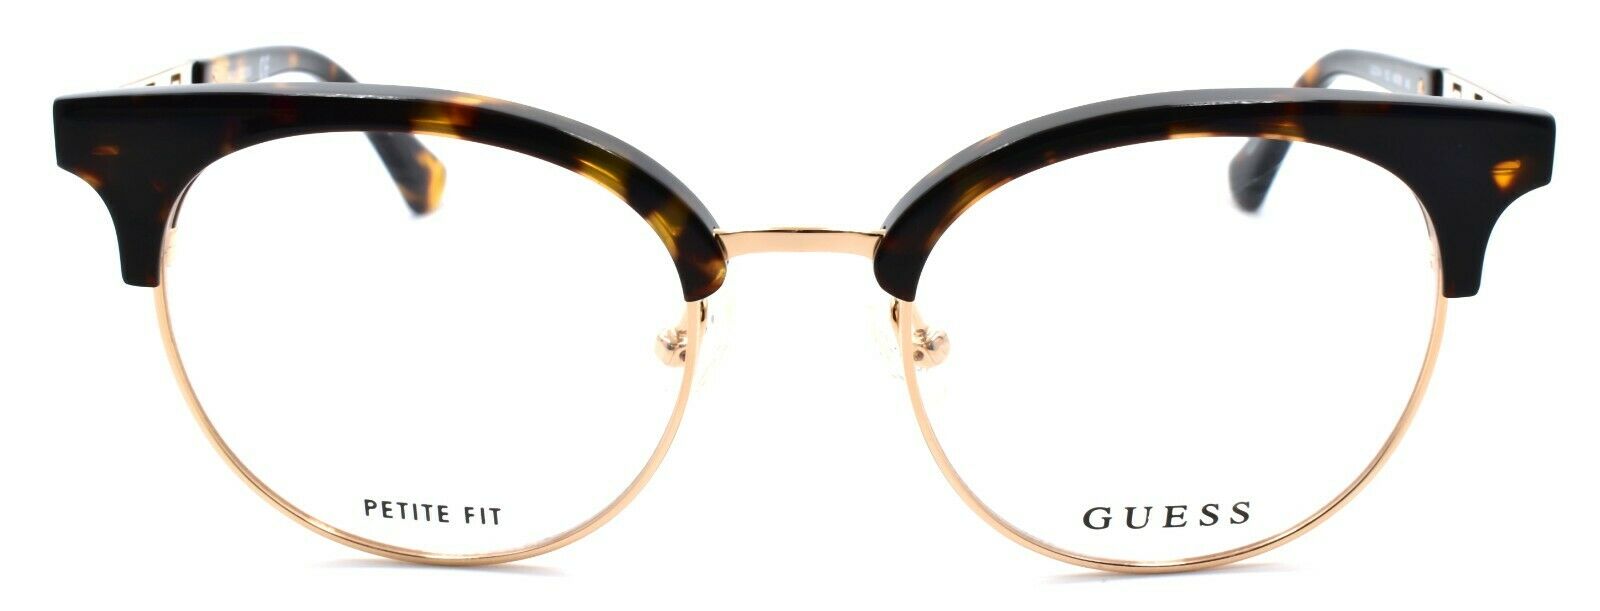 2-GUESS GU2744 052 Women's Eyeglasses Frames Petite 49-19-140 Dark Havana / Gold-889214111197-IKSpecs